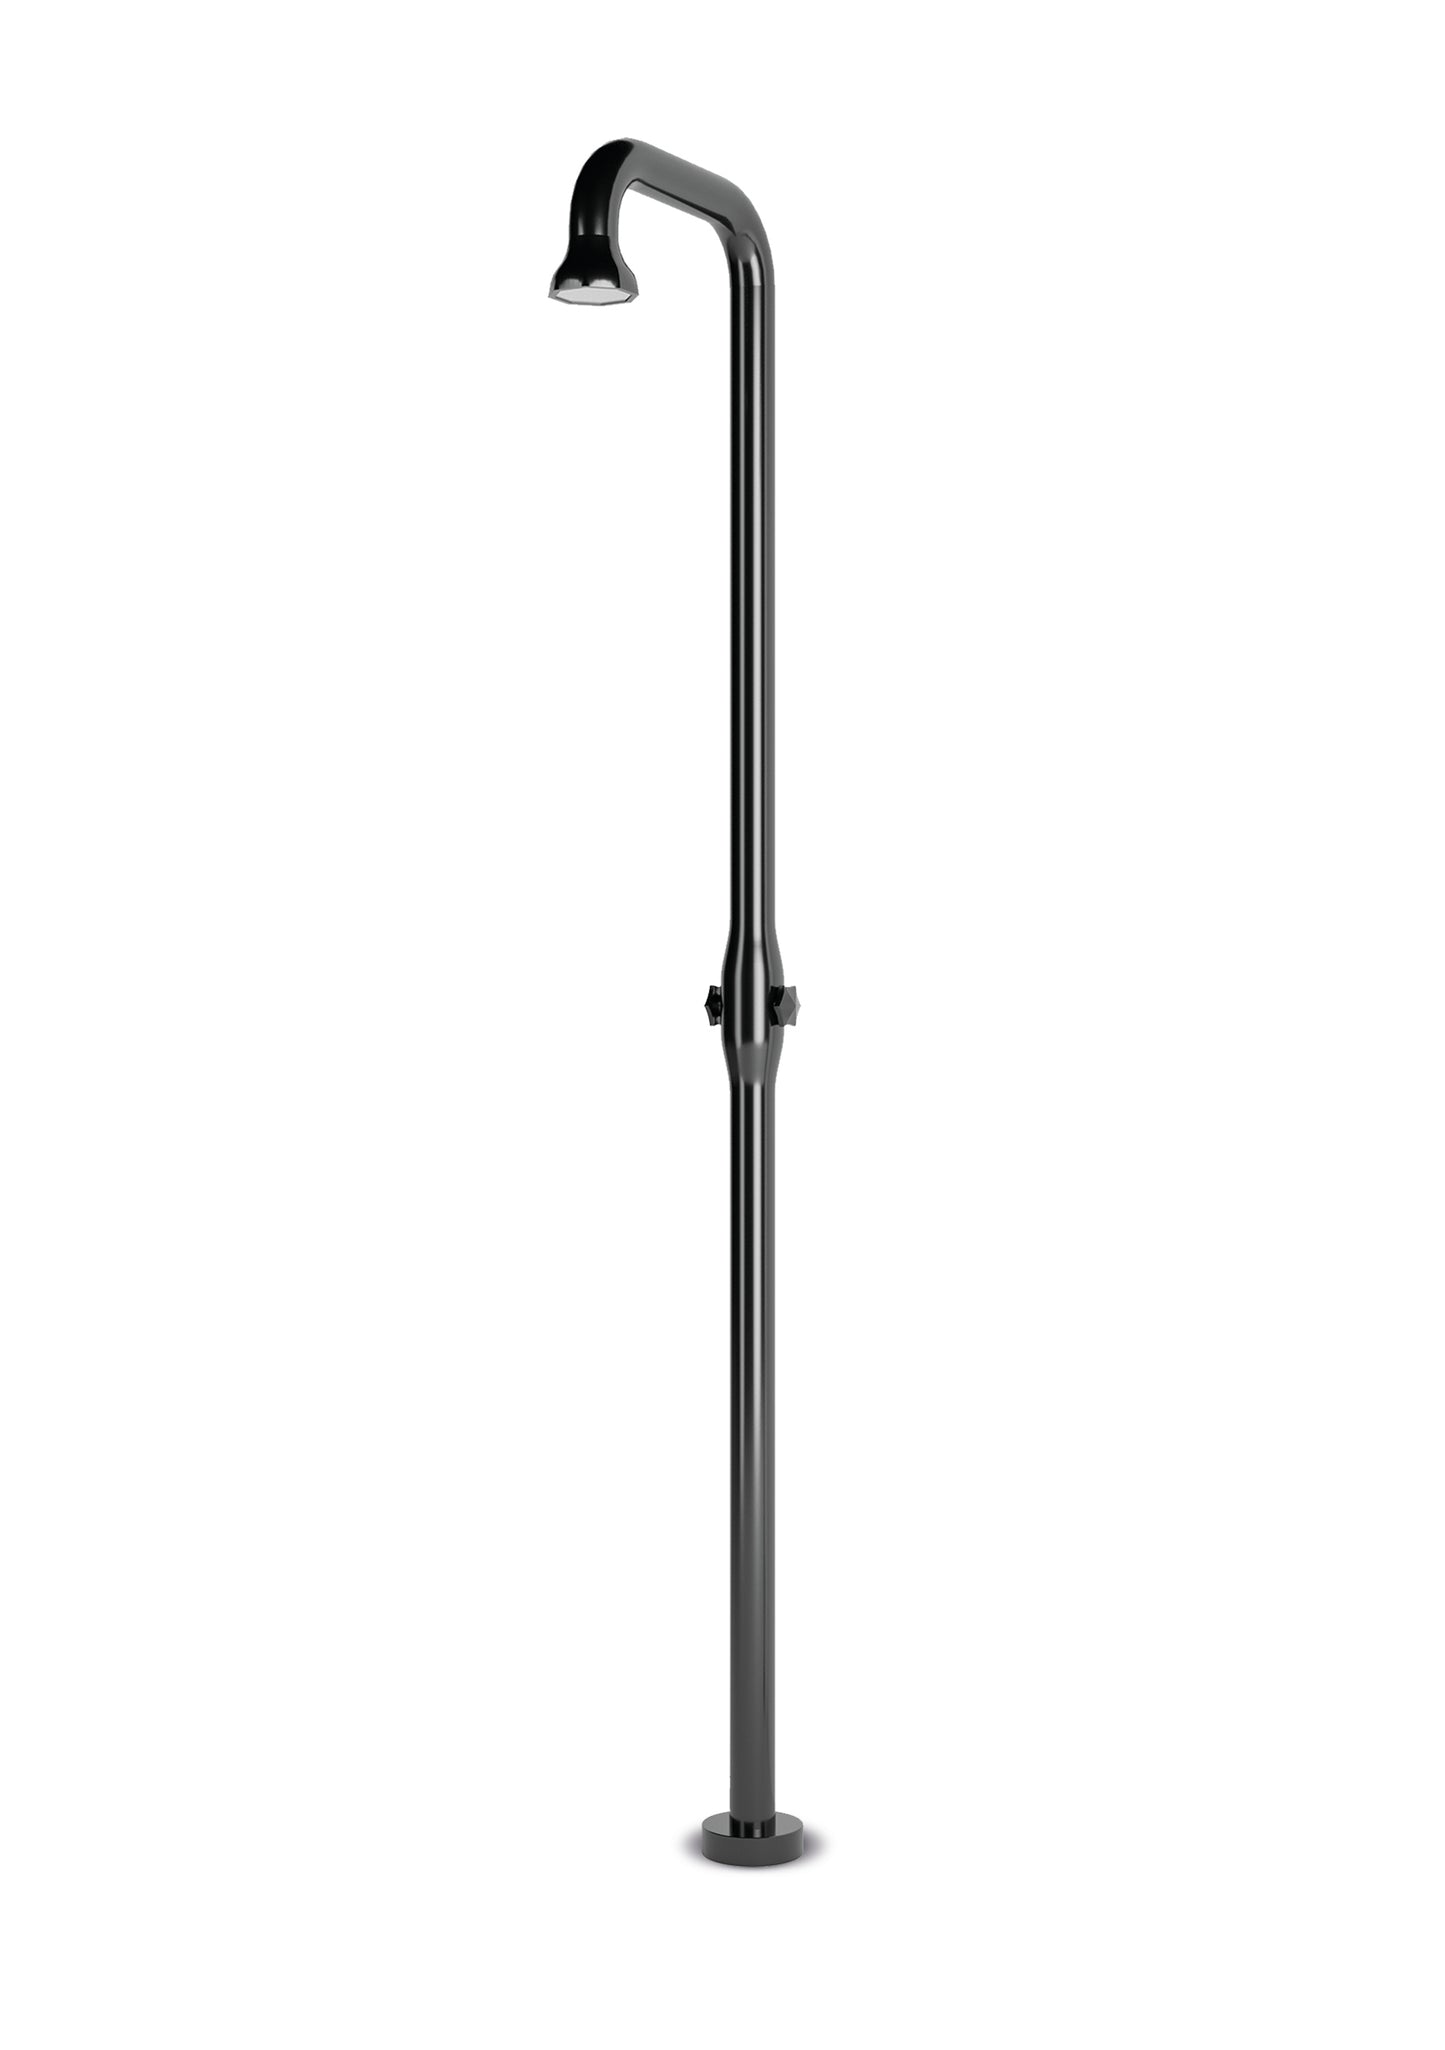 JEE-O Bloom Shower 01 Freestanding Shower Faucet Stainless Steel, Gun Metal